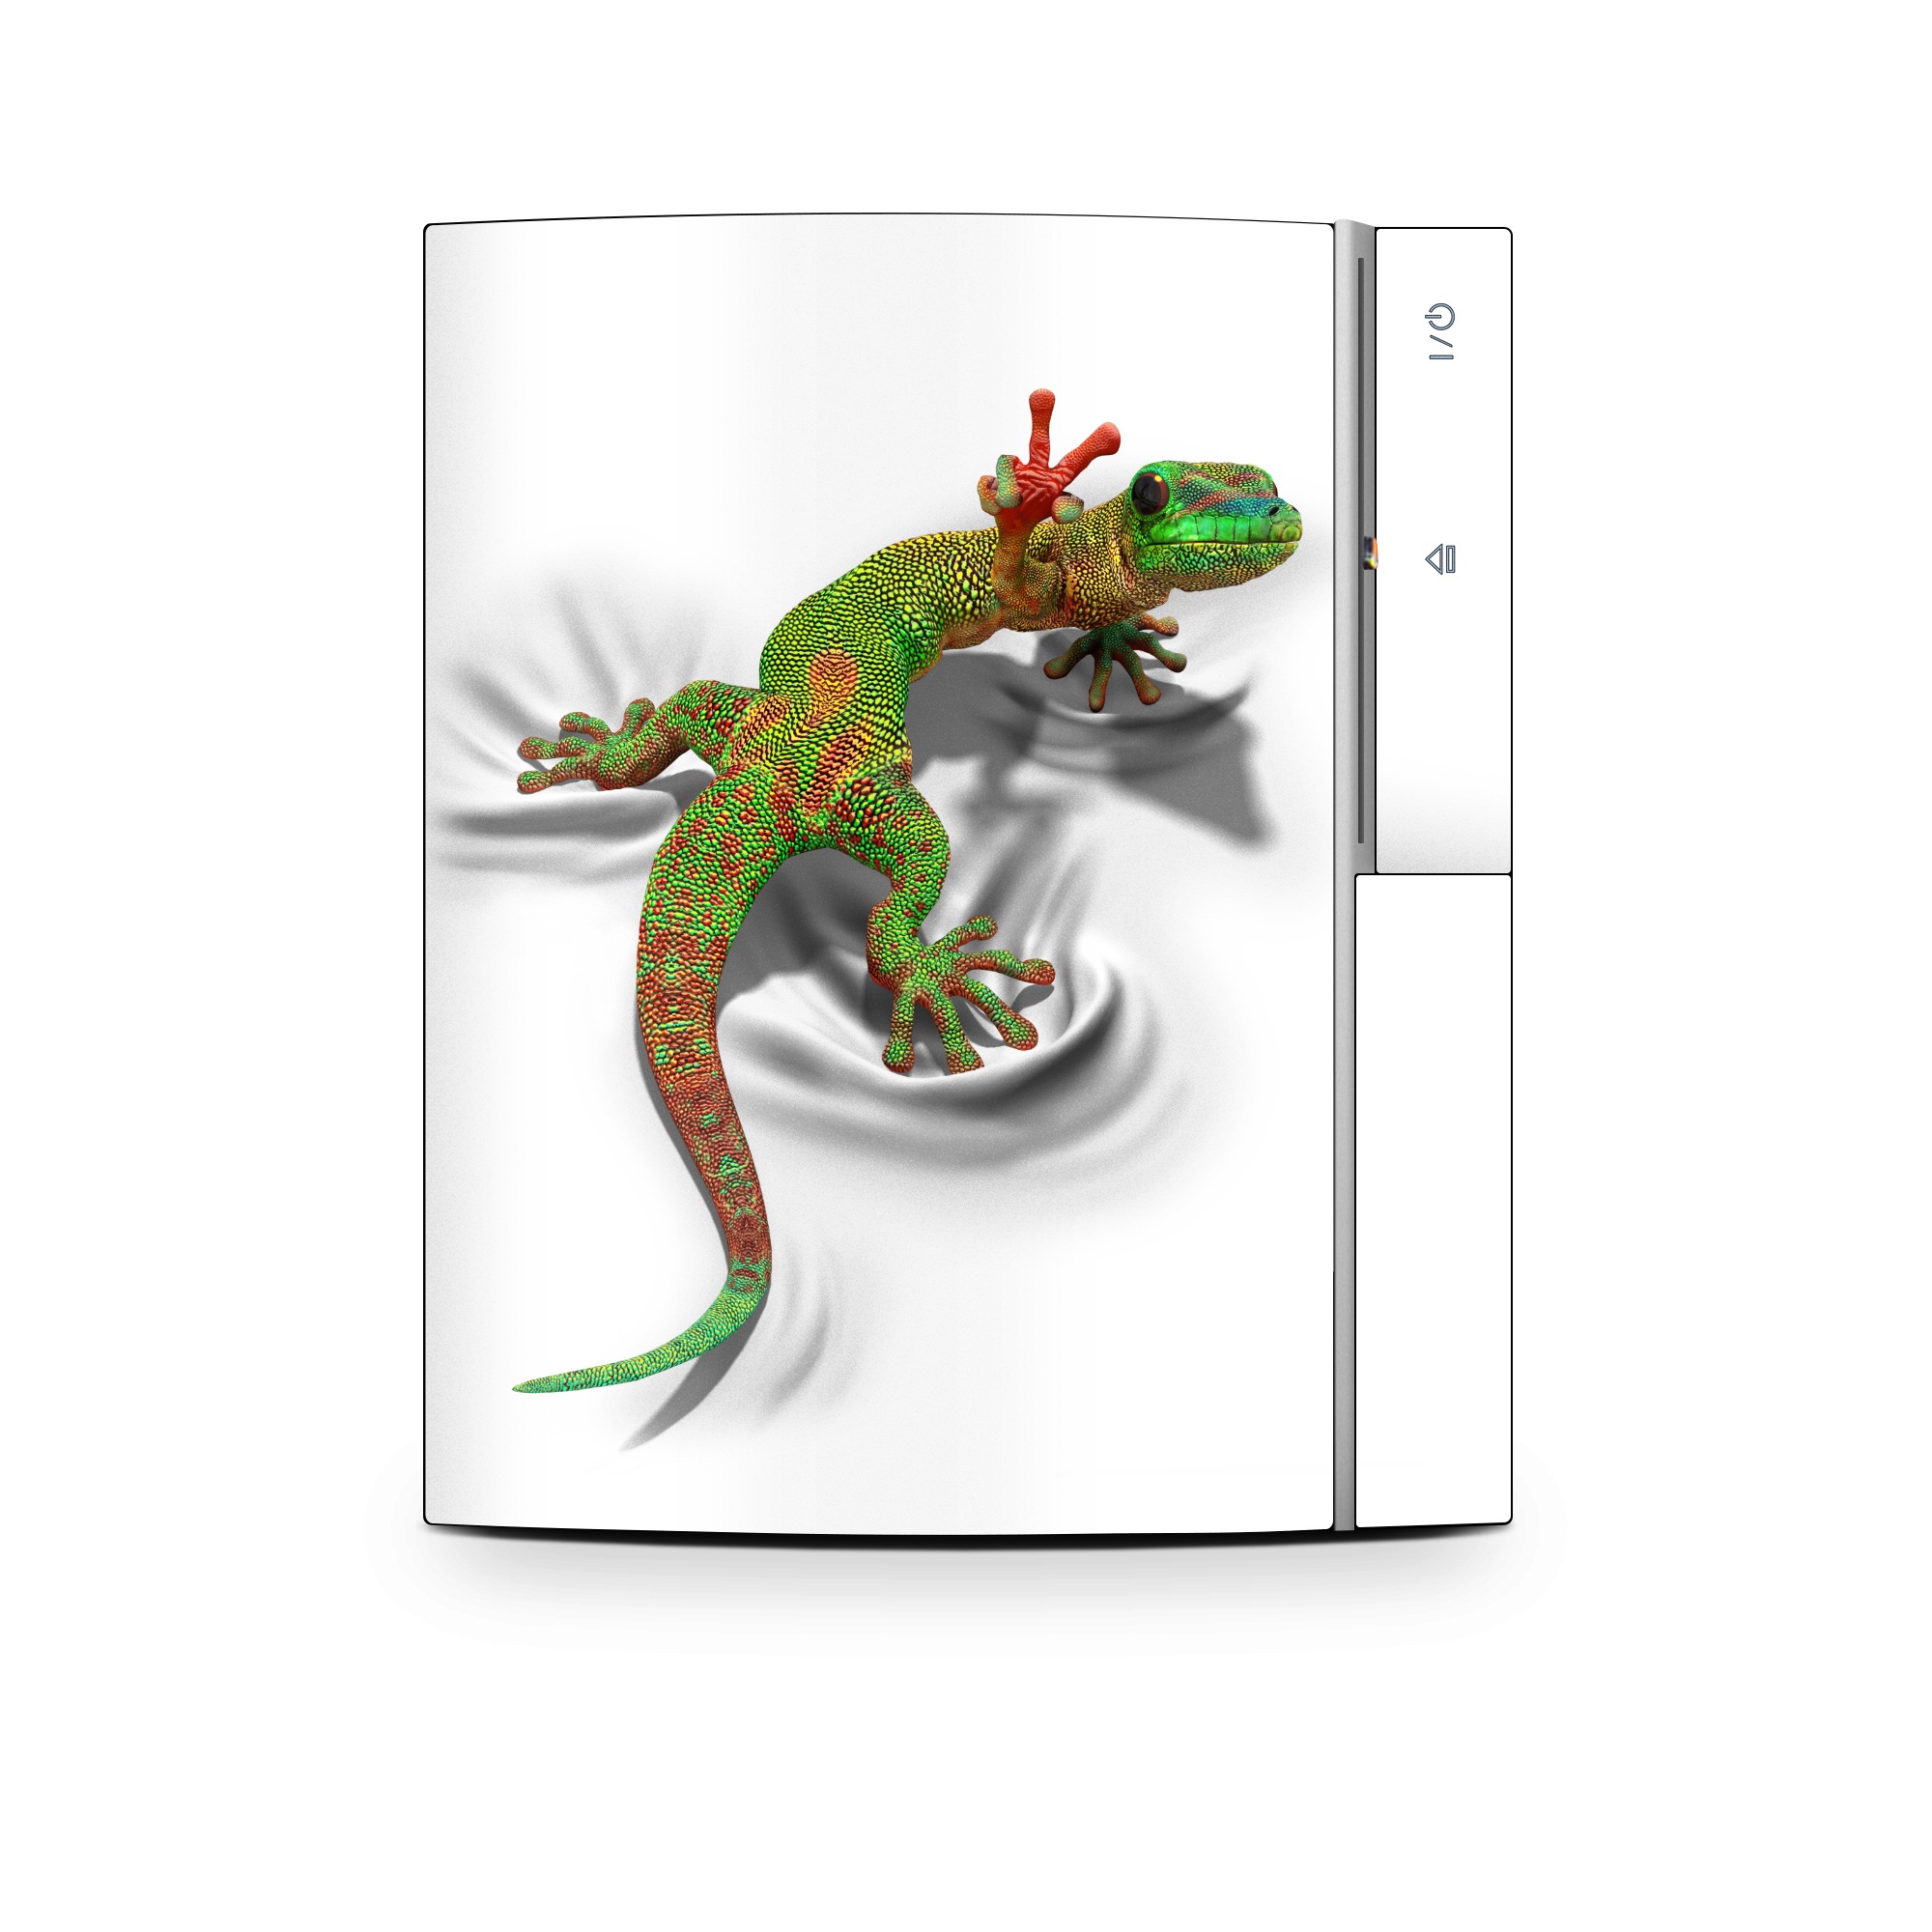 PS3 Skin - Gecko (Image 1)